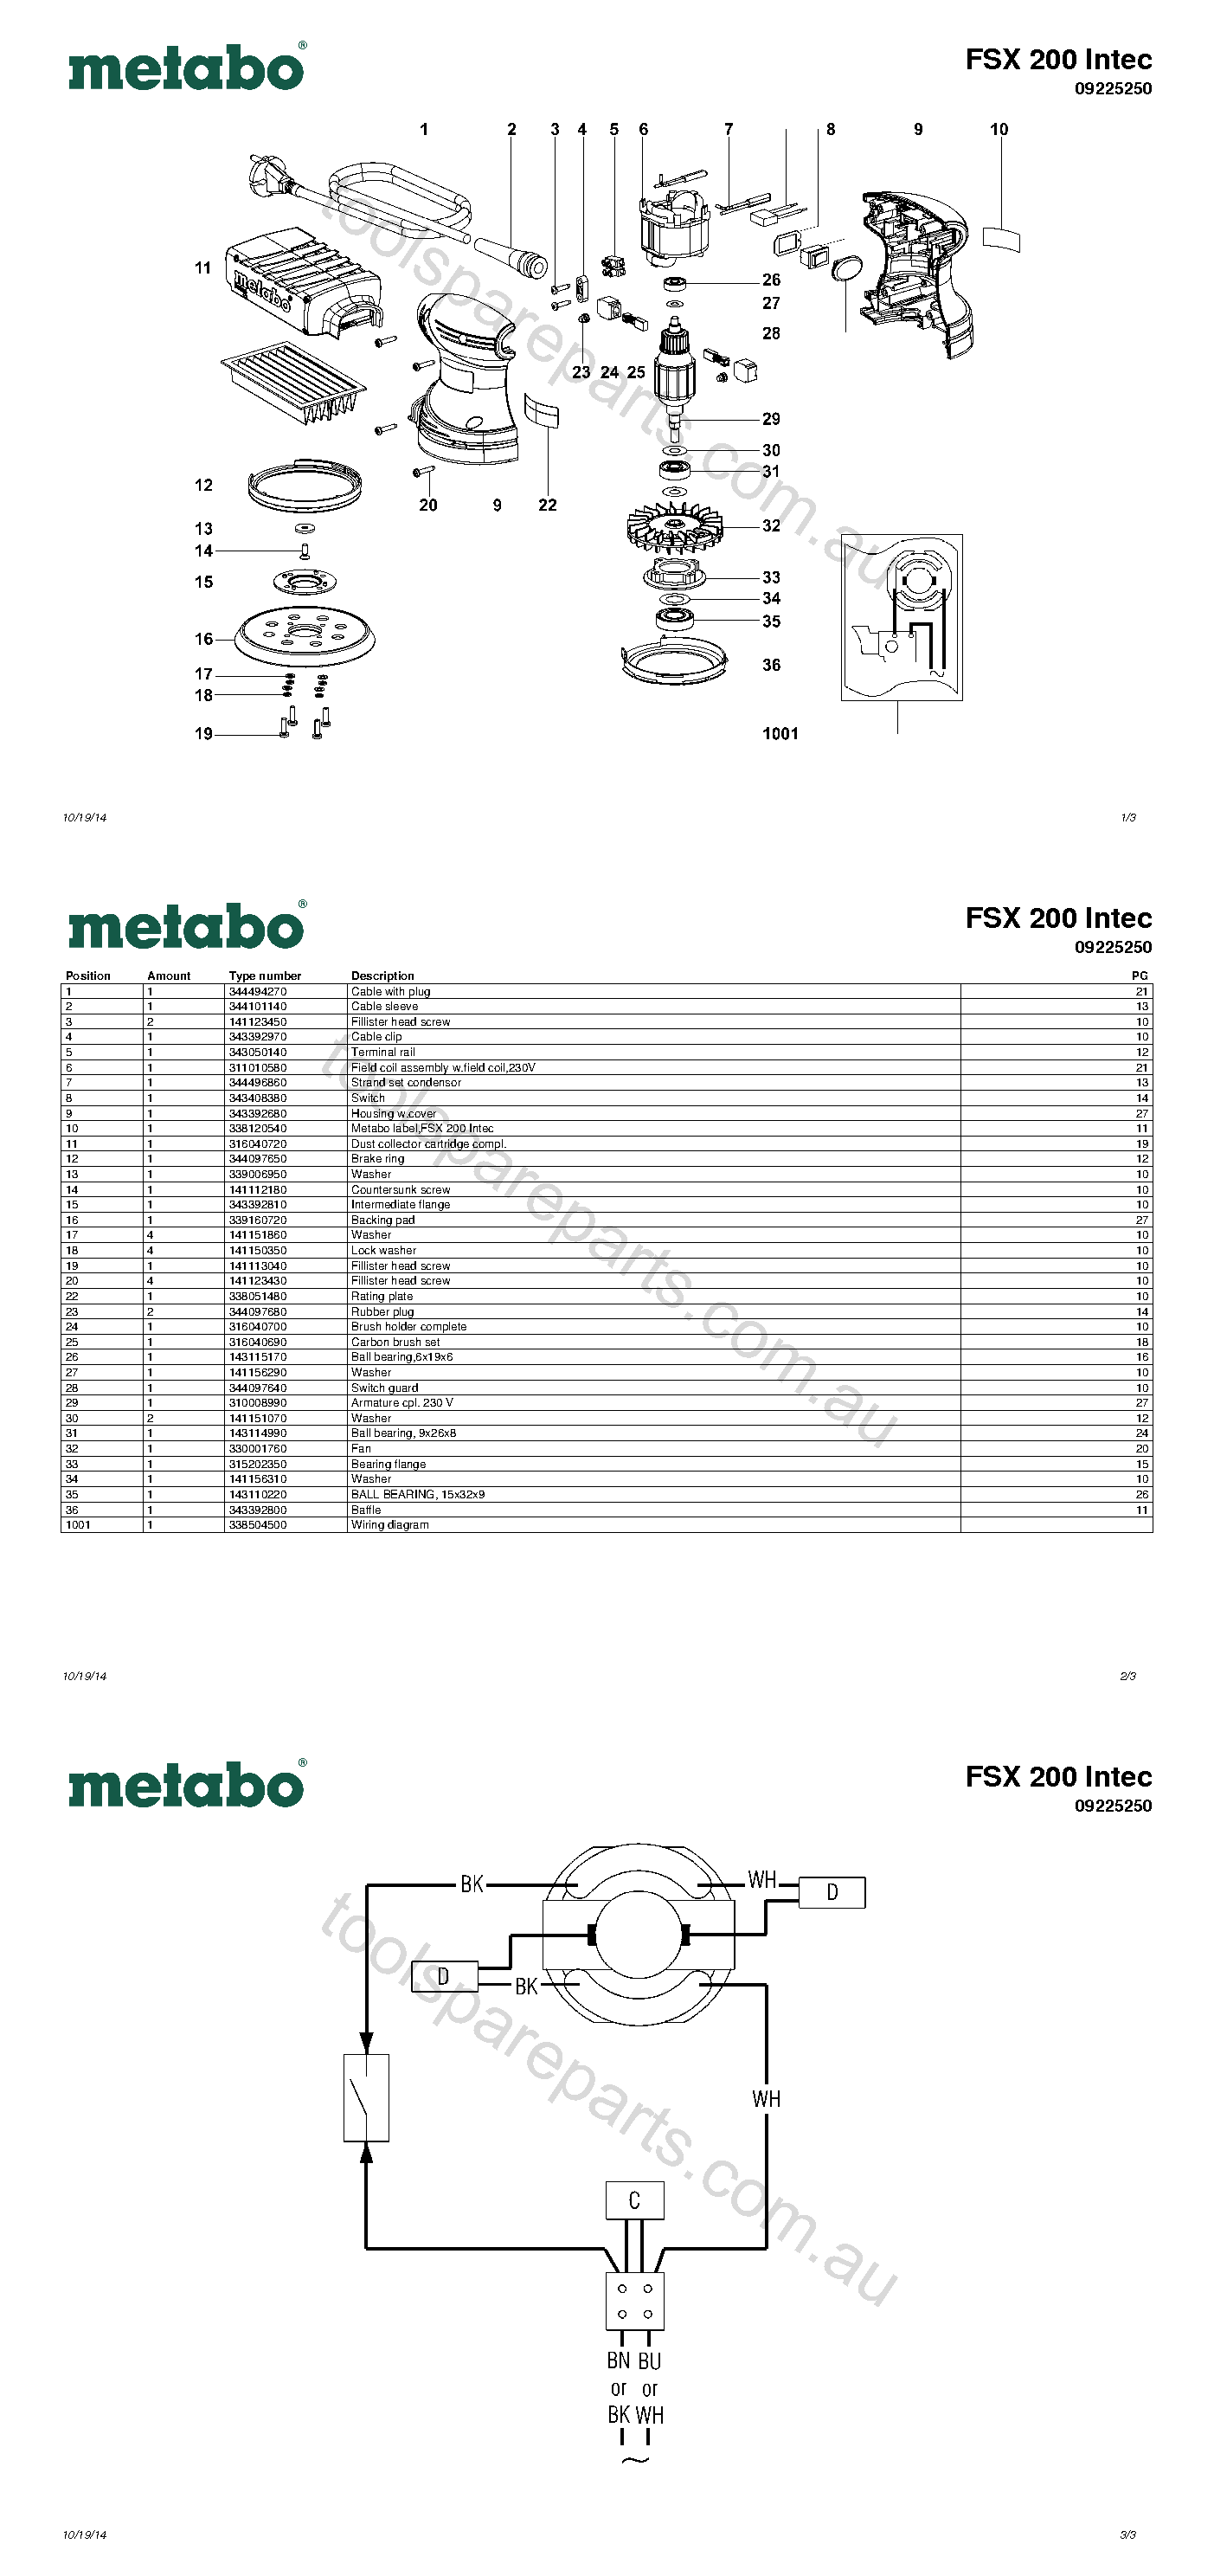 Metabo FSX 200 Intec 09225250  Diagram 1